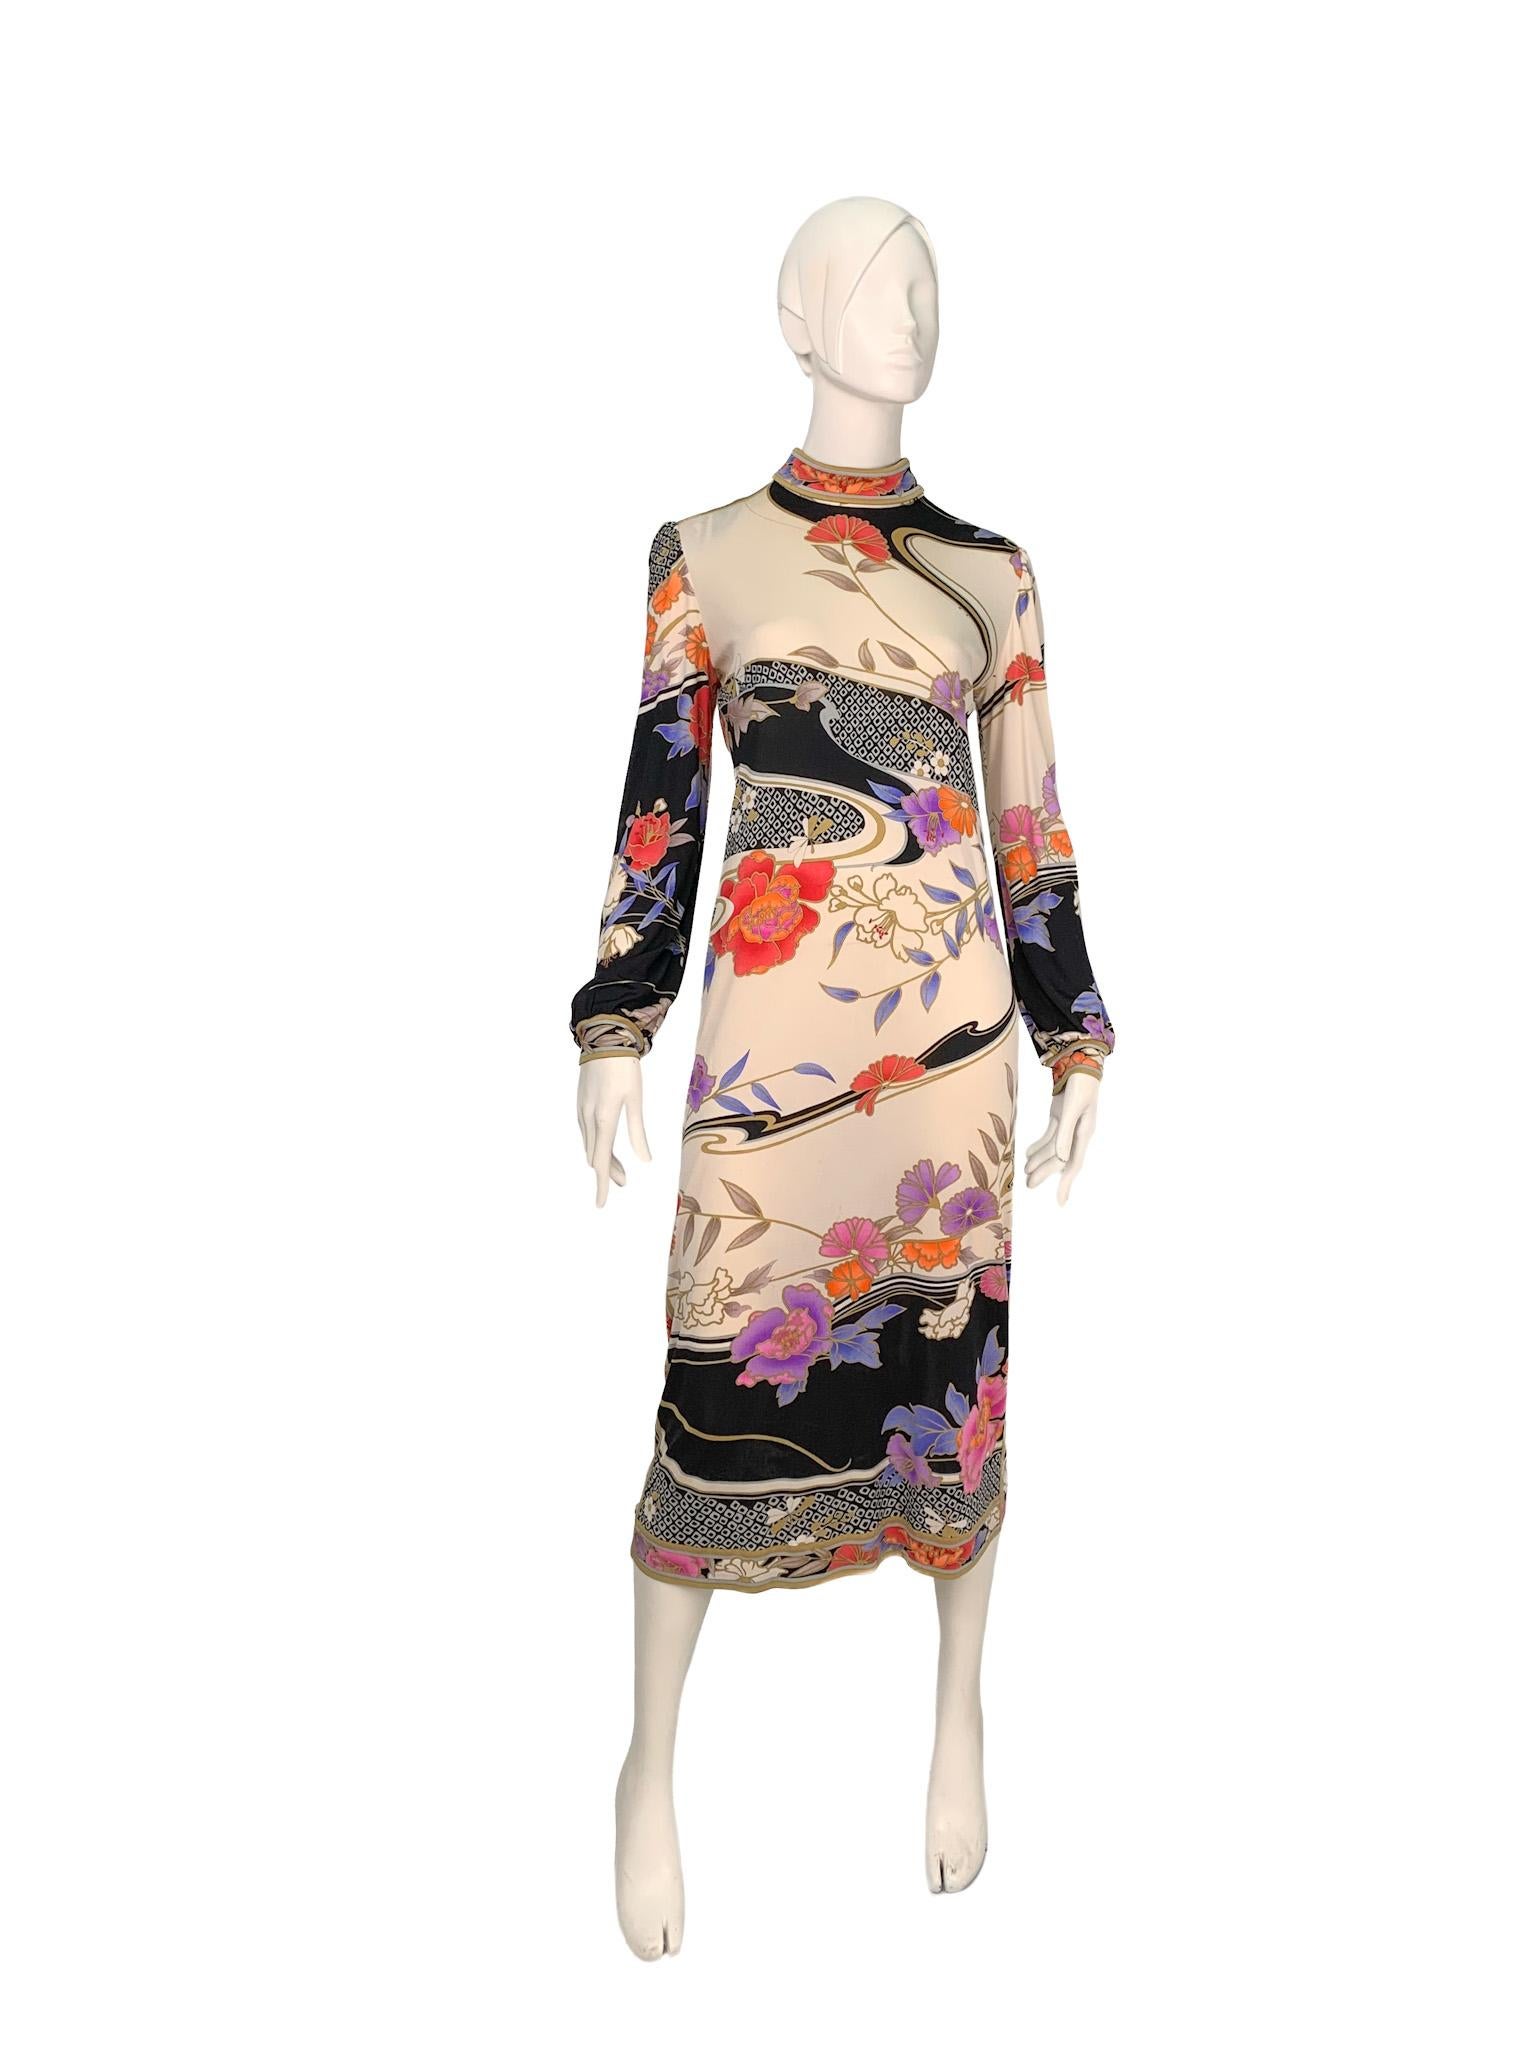 Leonard Paris printed dress in 100% mikado silk jersey. 11